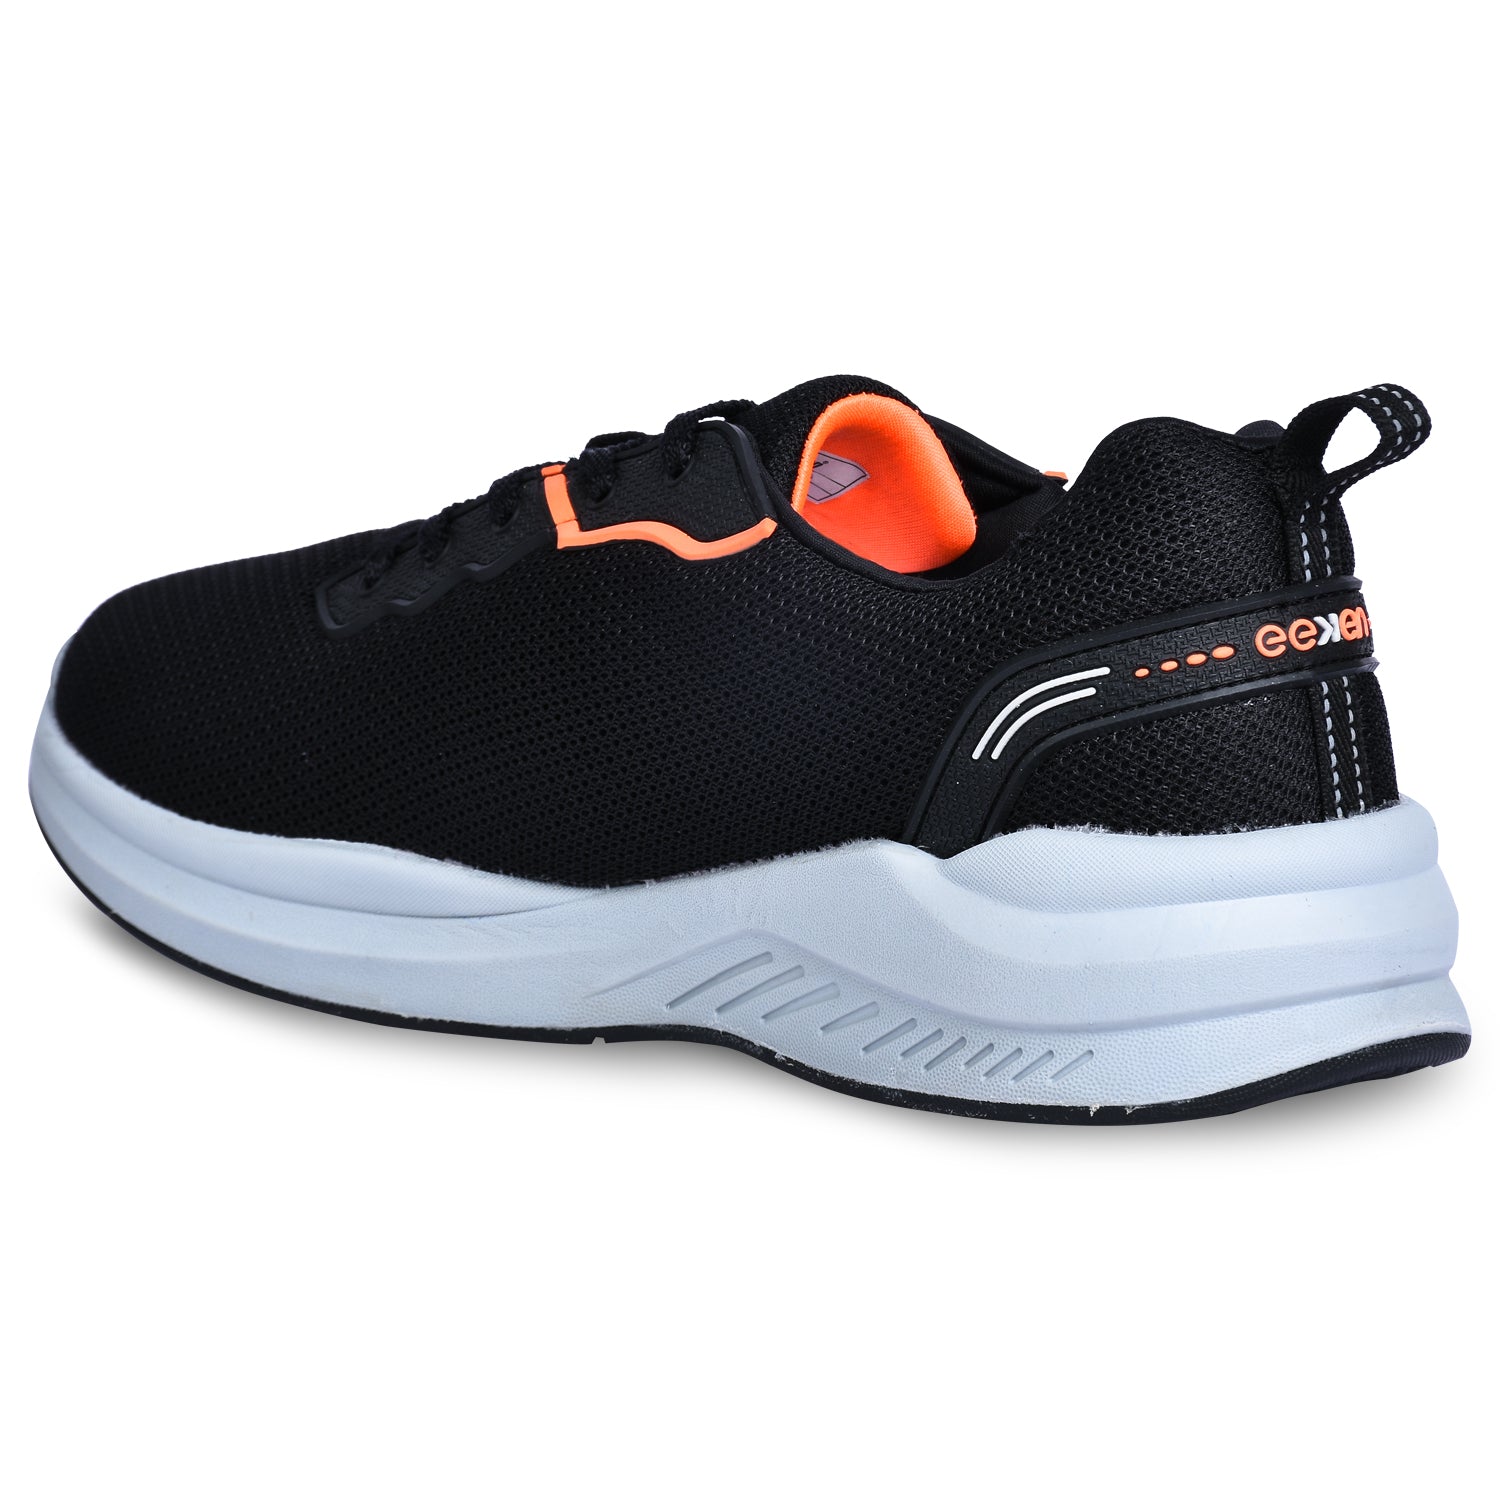 Eeken KESHGIA114 Black Lightweight Soft Cushioned Walking Shoes For Men